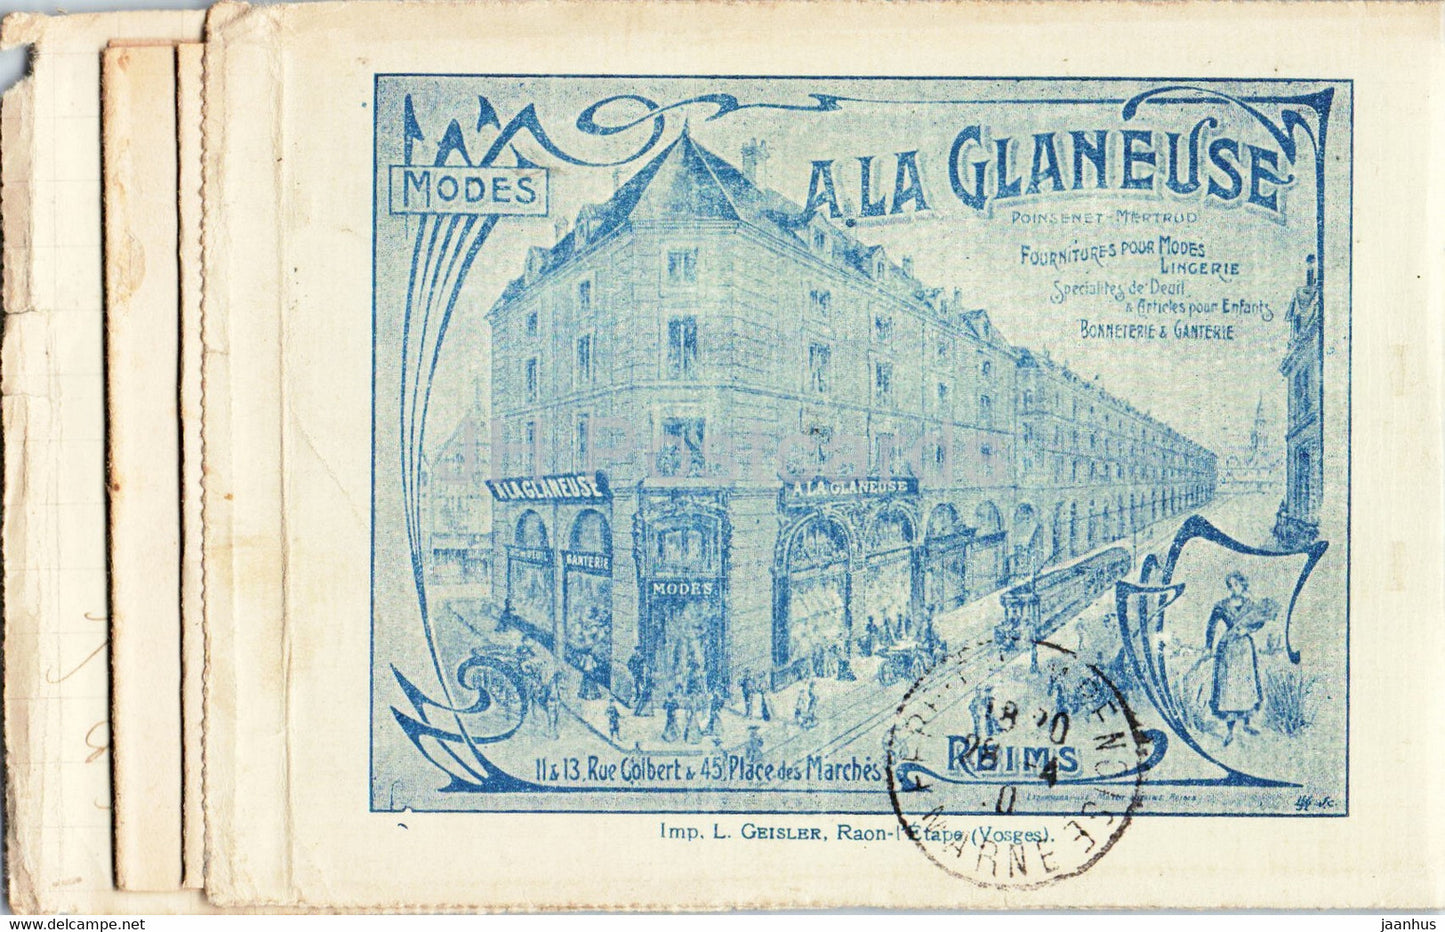 Reims - Place des Marches - Modes A la Glaneuse -  old postcard - 1910 - France - used - JH Postcards